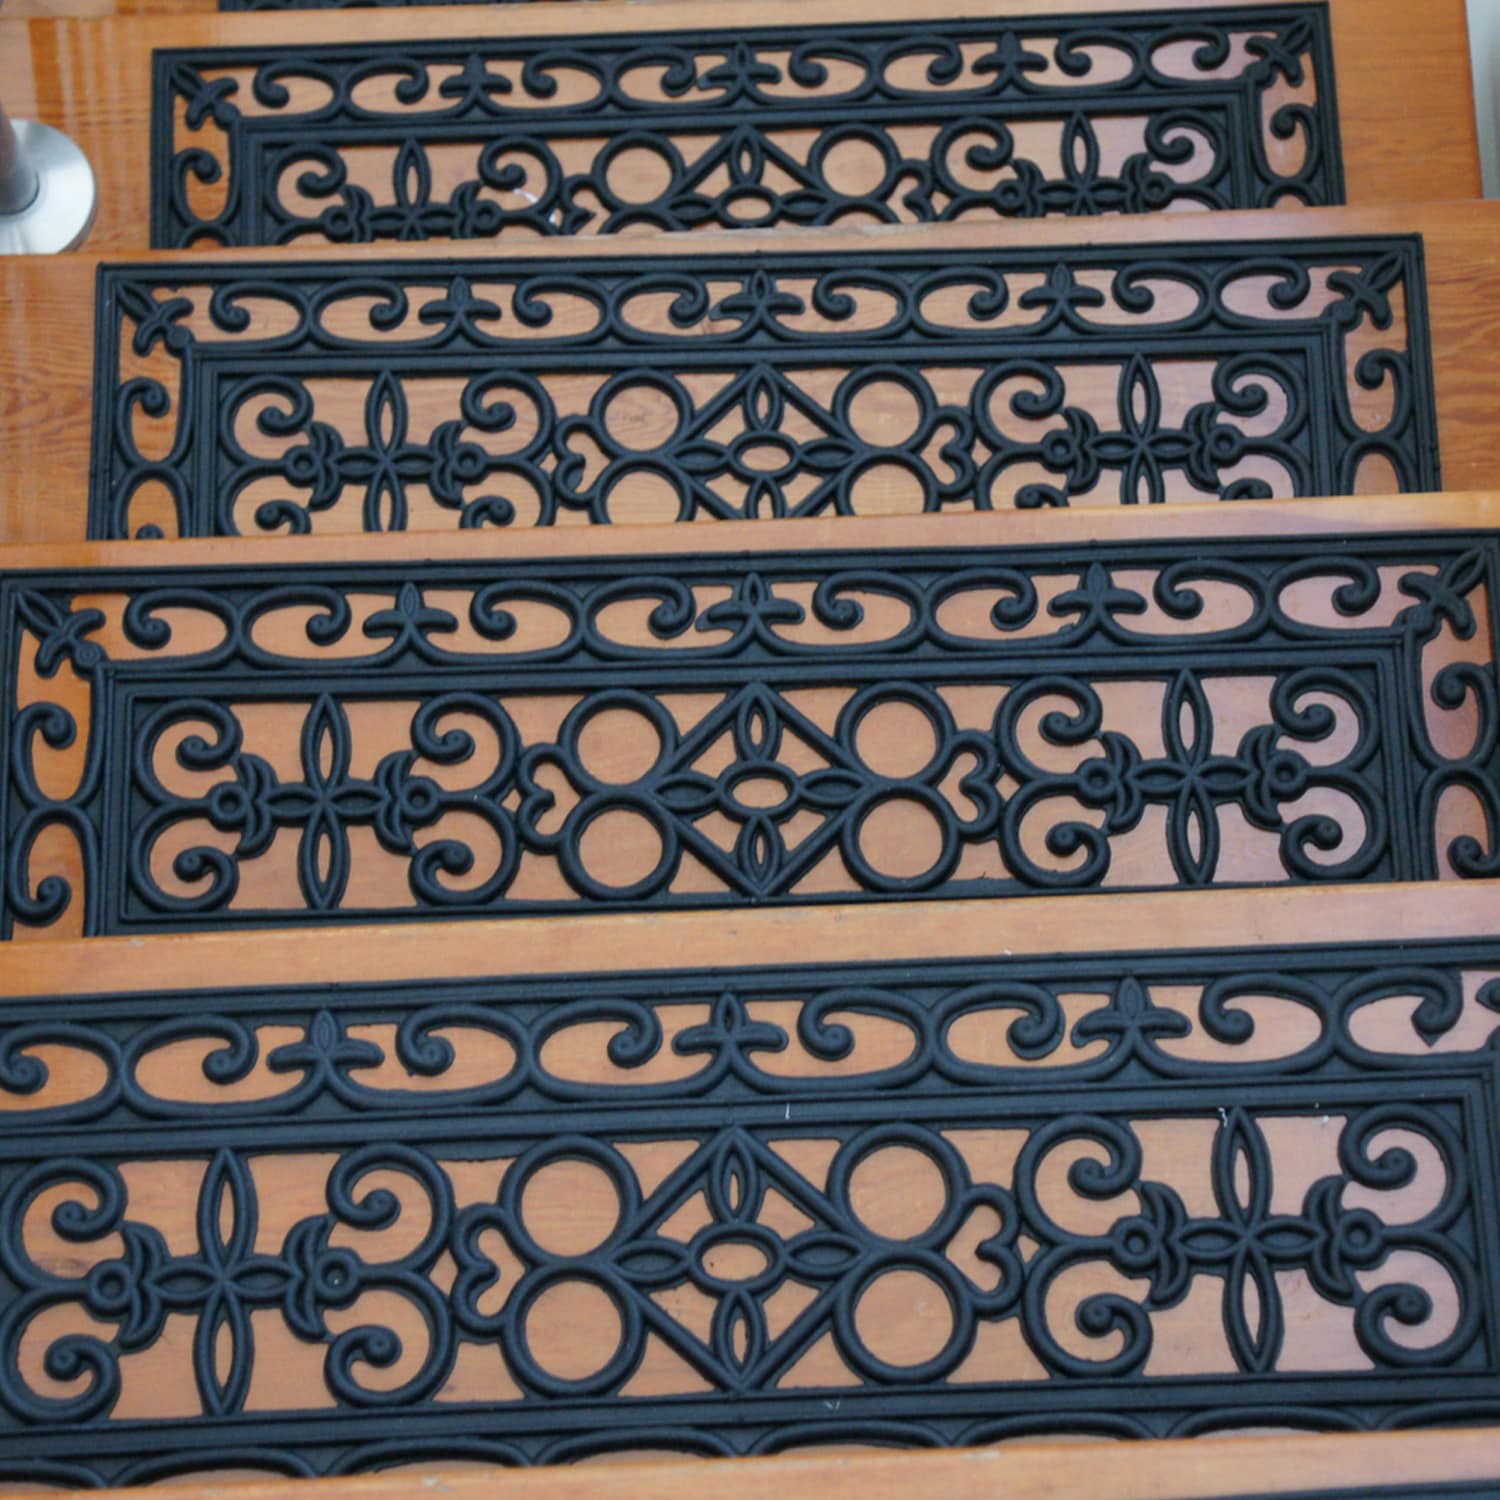 Ottomanson Rubber Collection Non-Slip Bullnose Design Stair Treads , 5 Pack, 10 x 30, Black